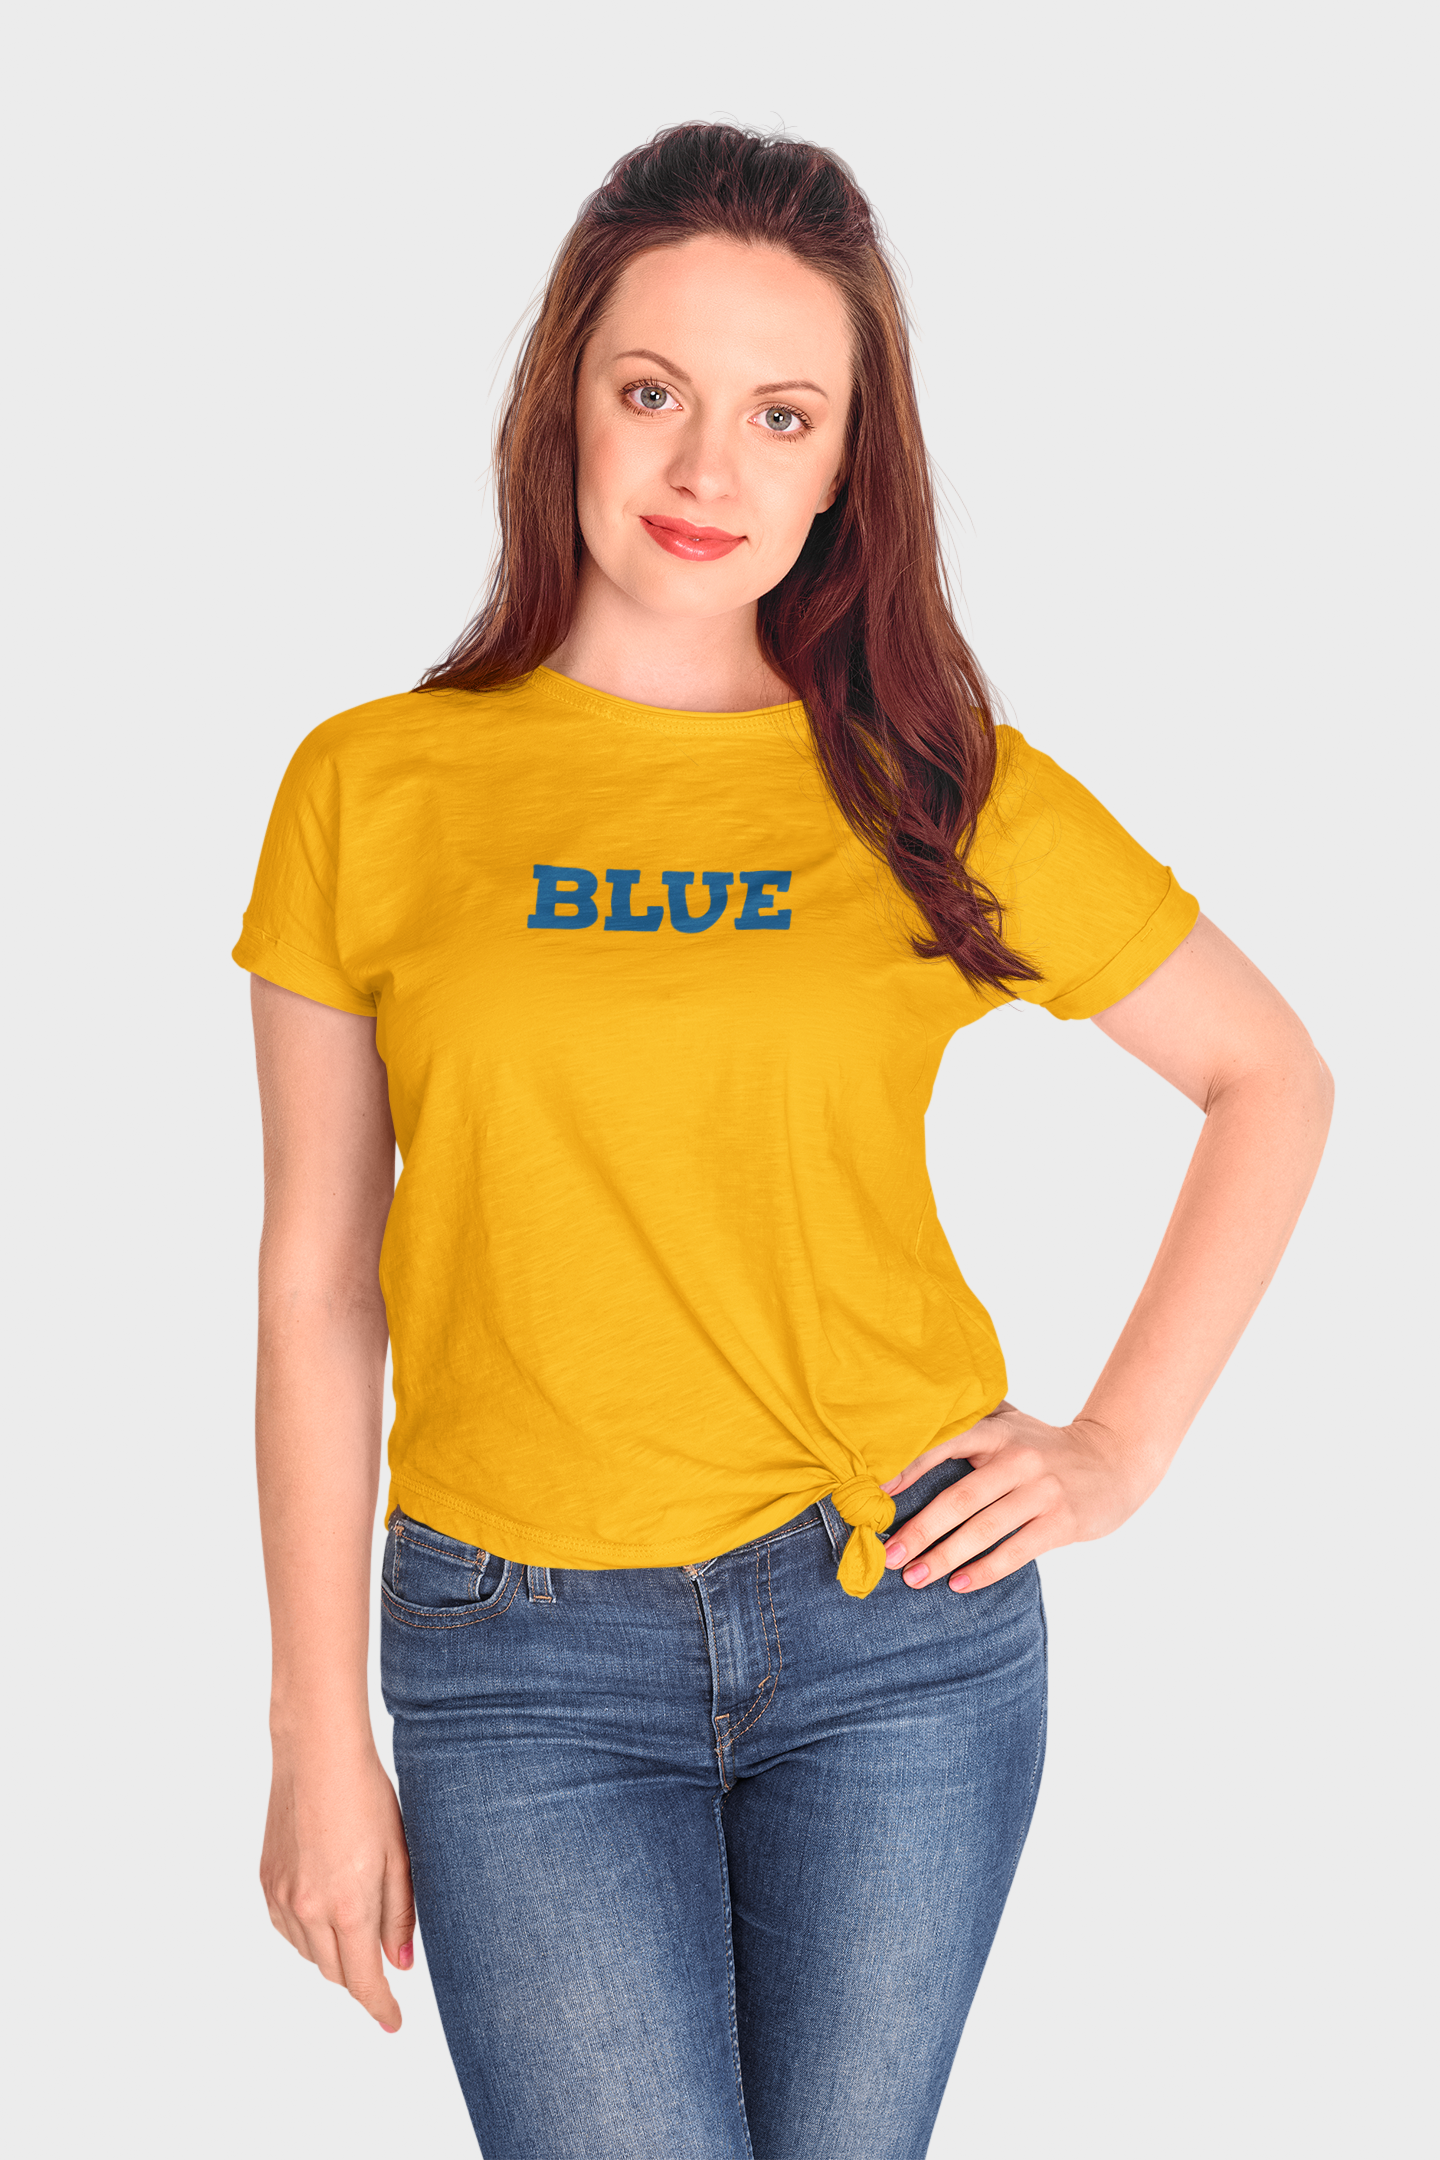 ATOM Basic Colour Splash Mustard Yellow Round Neck T-Shirt for Women. 